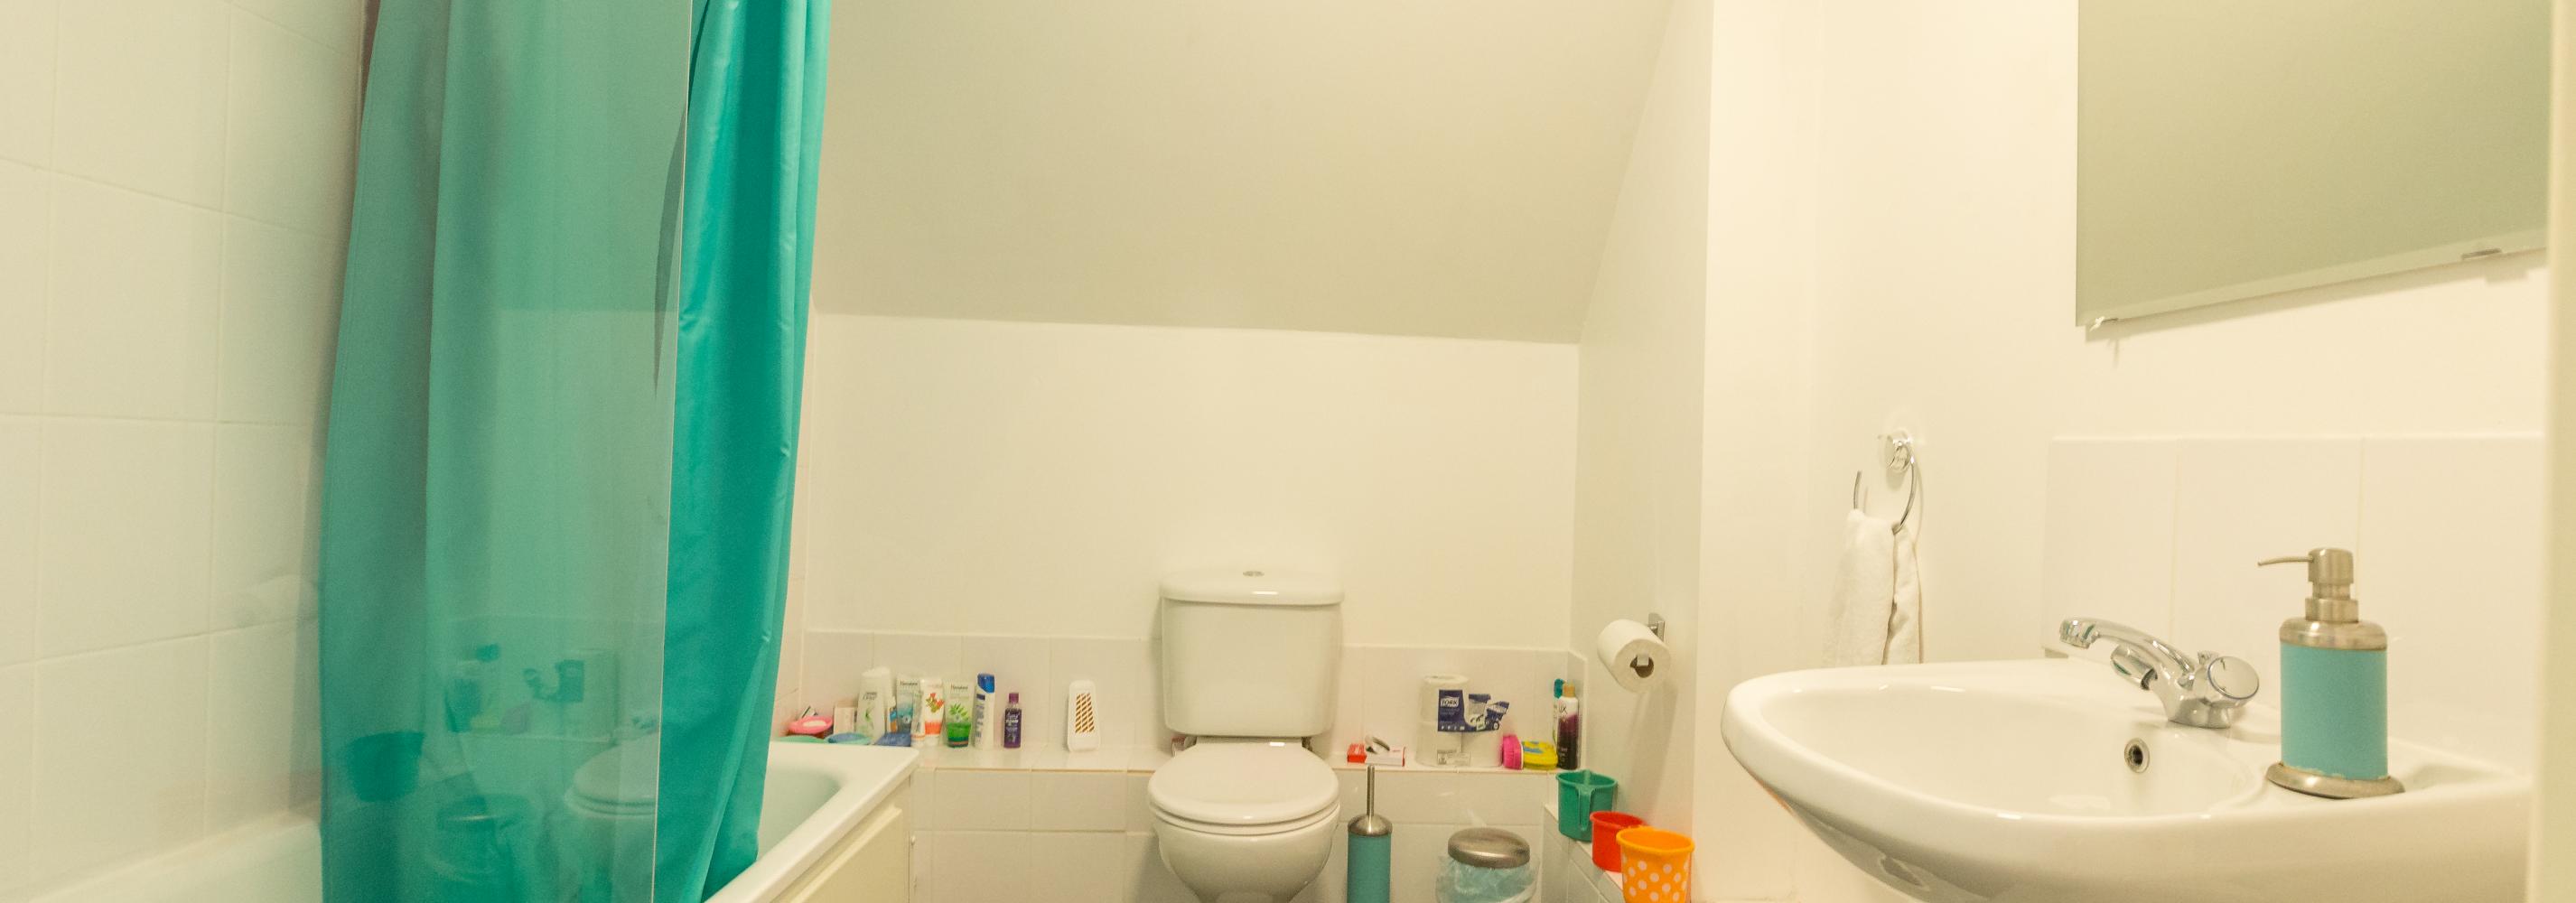 Bathroom, bath, shower curtain, toilet, sink and mirror